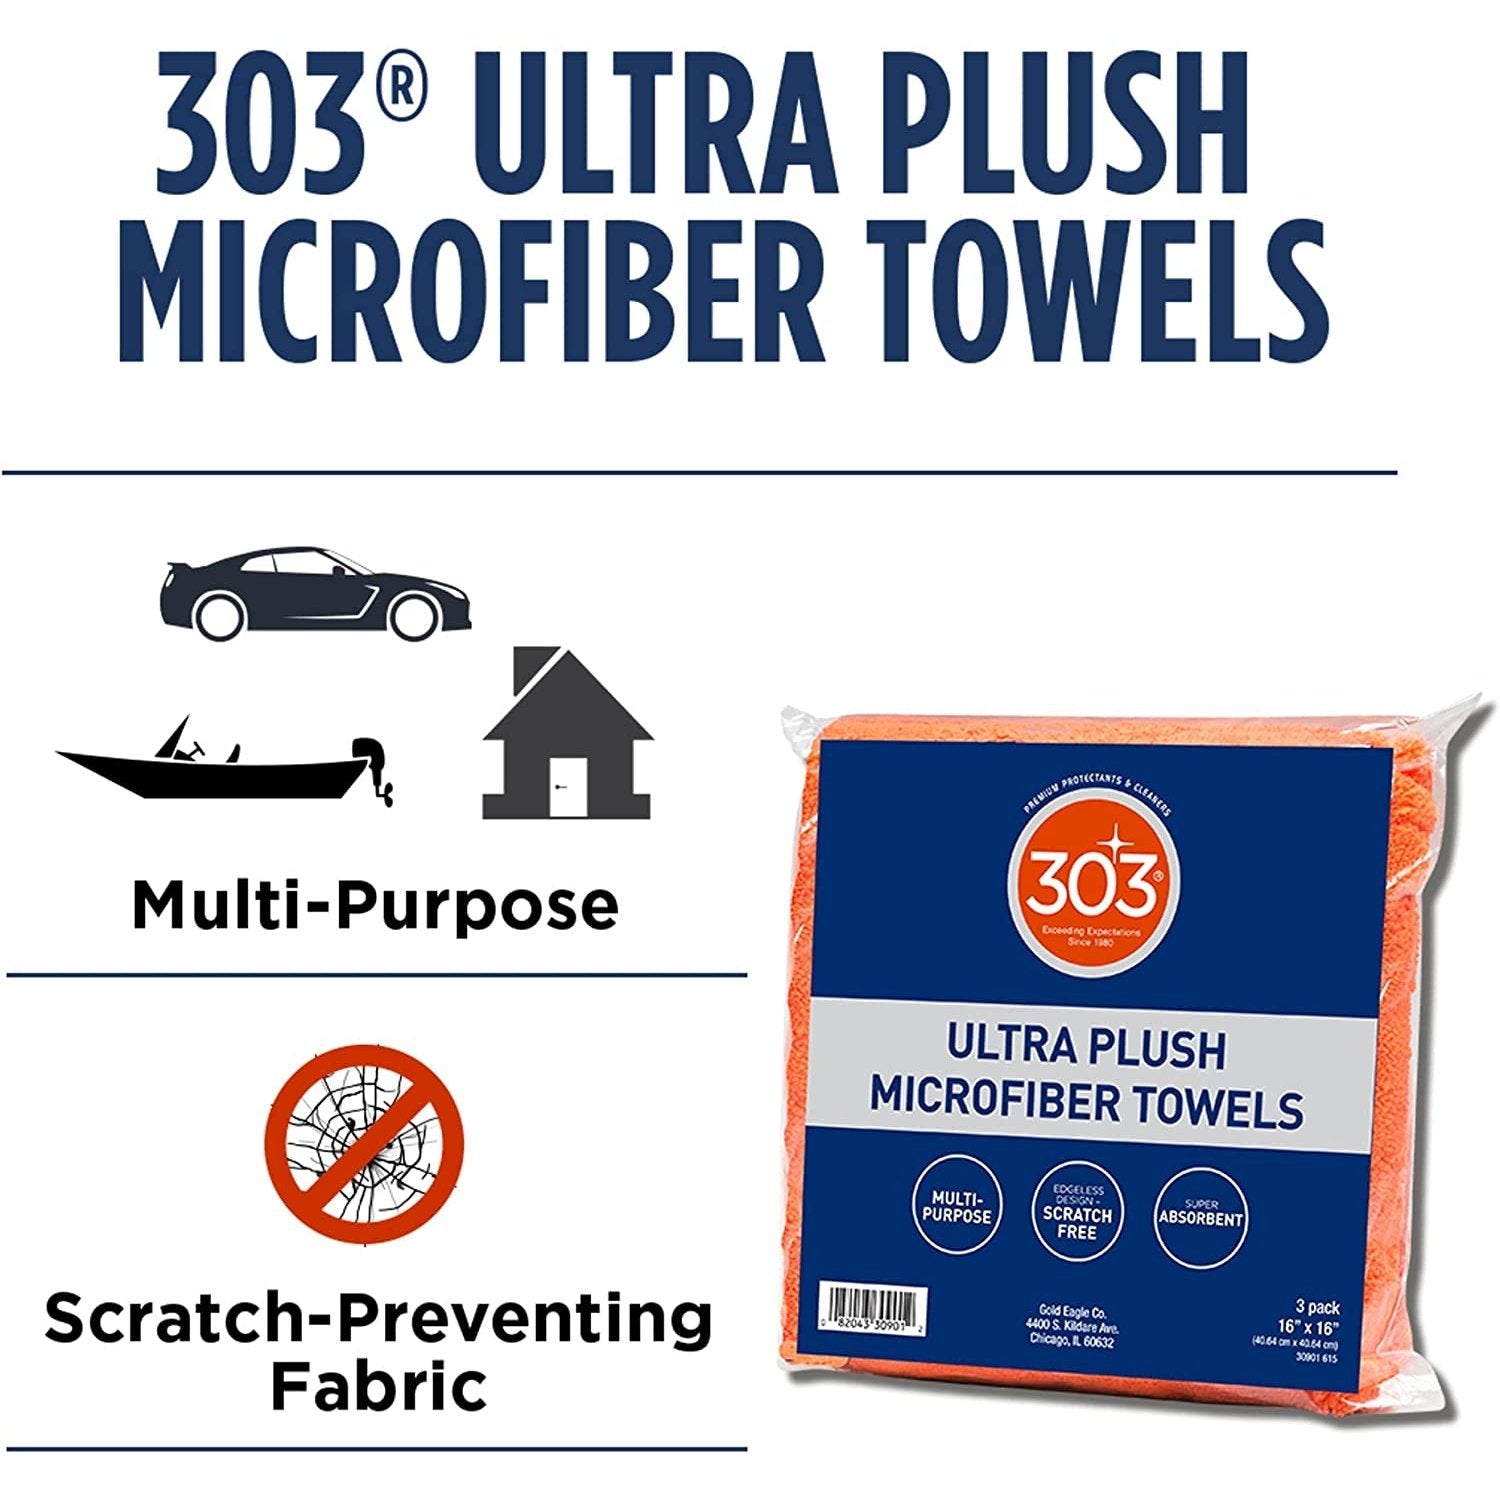 303 Ultra Plush Microfiber Towels 3 Pack